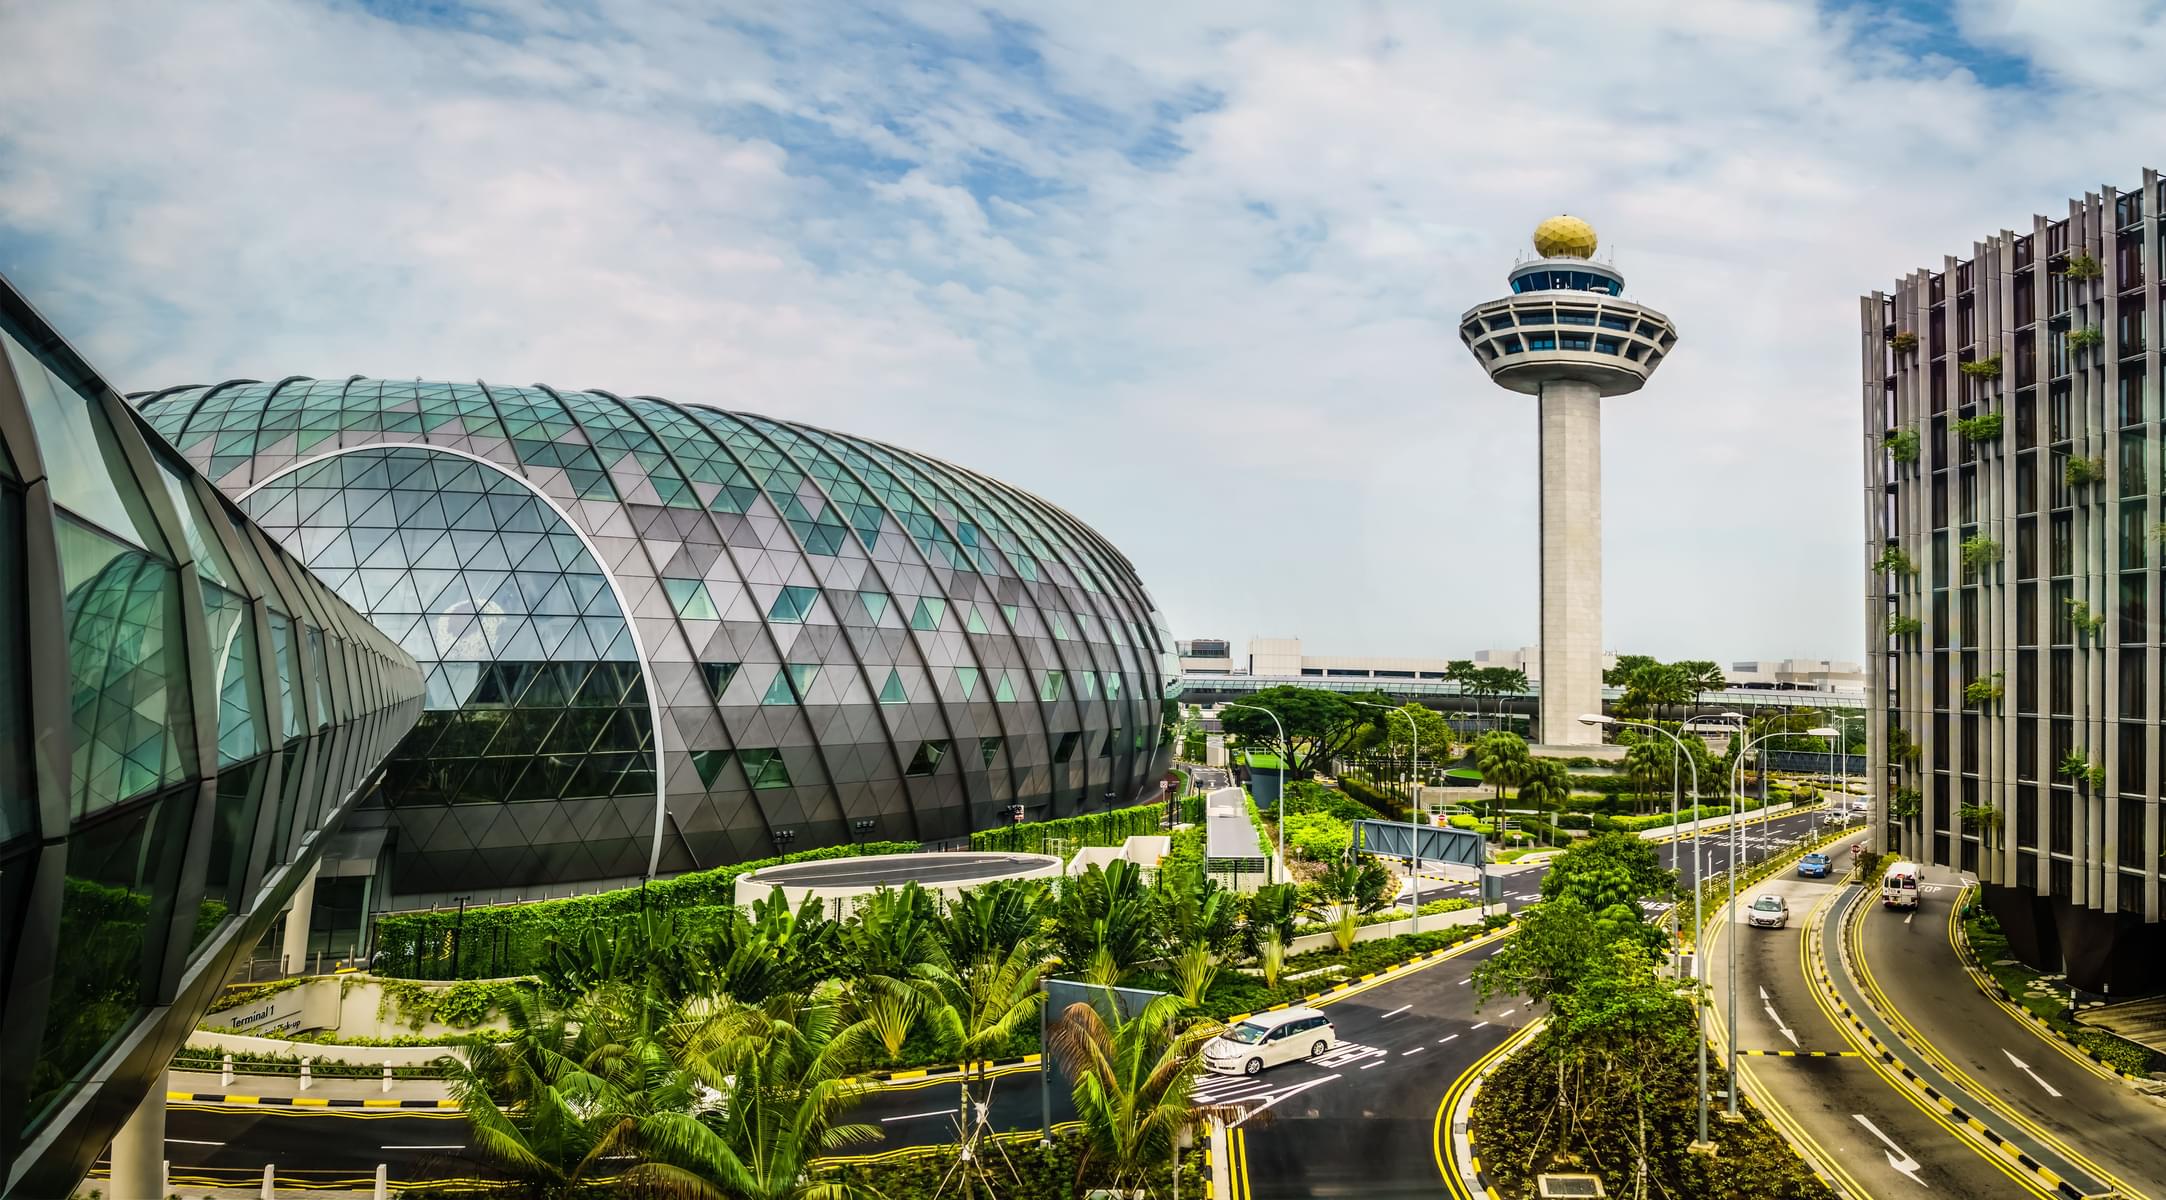 Highlights of Jewel Changi Airport